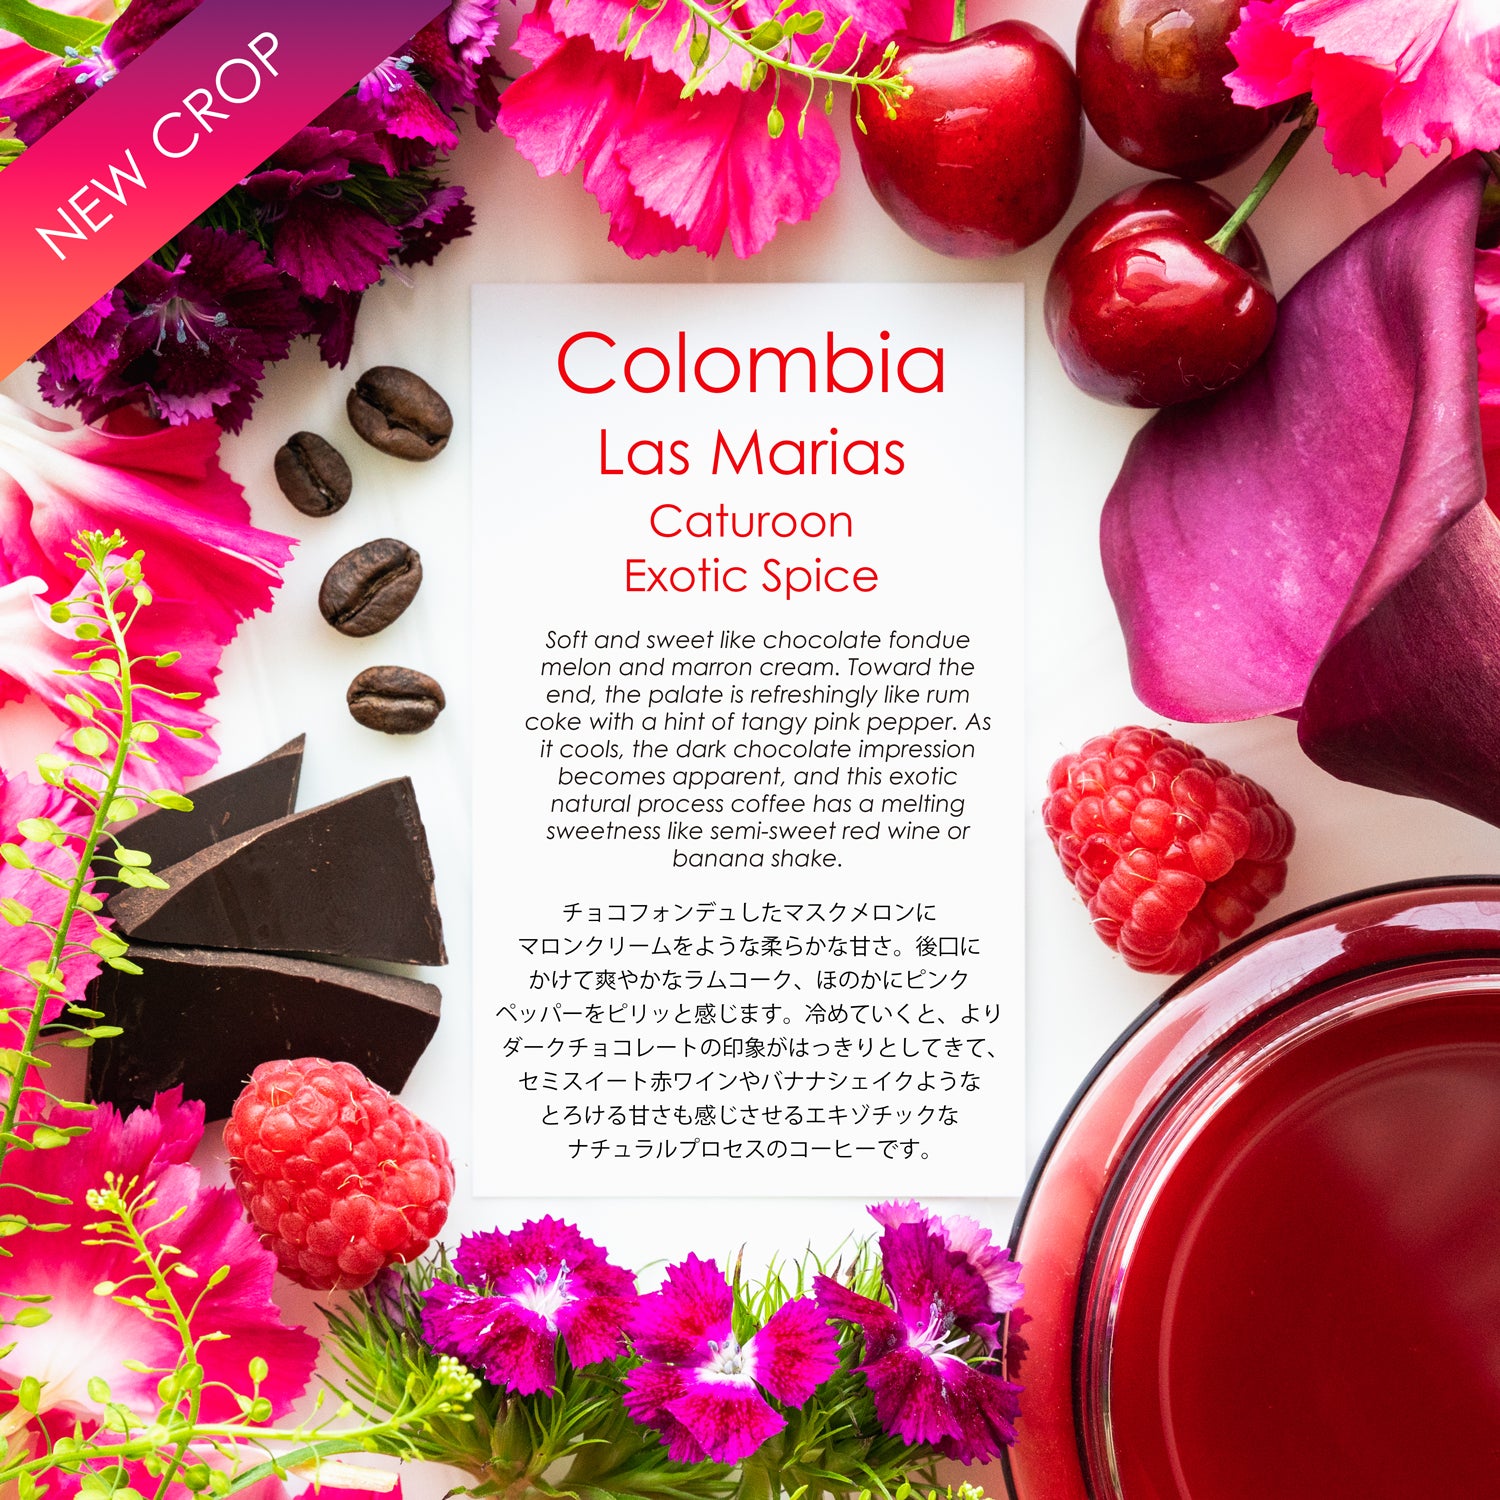 Las Marias Caturoon Exotic Spice [chocolate fondue melon]